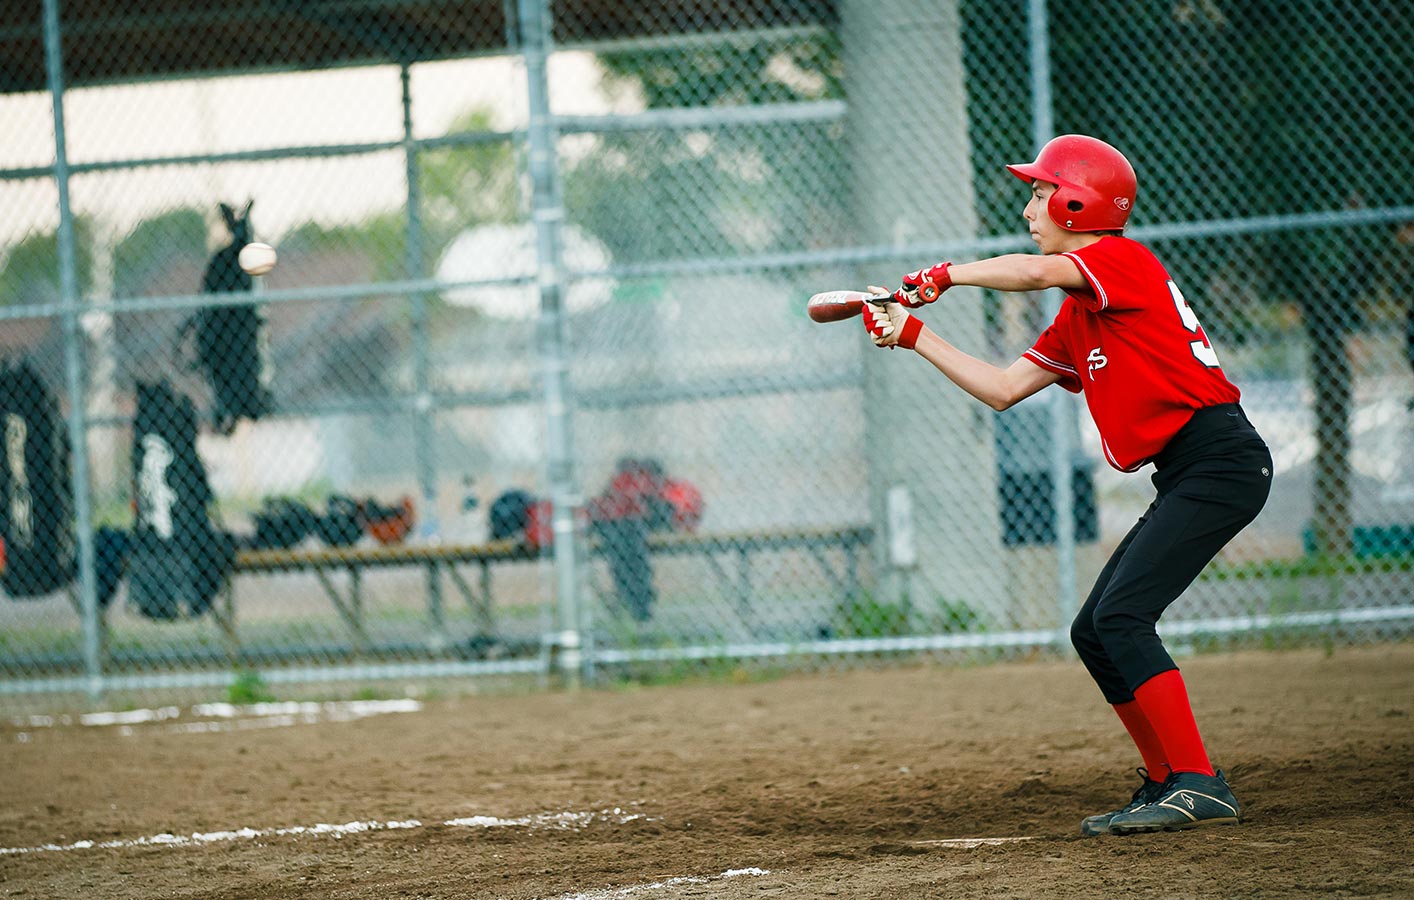 Baseball mineur - Photographe de sport